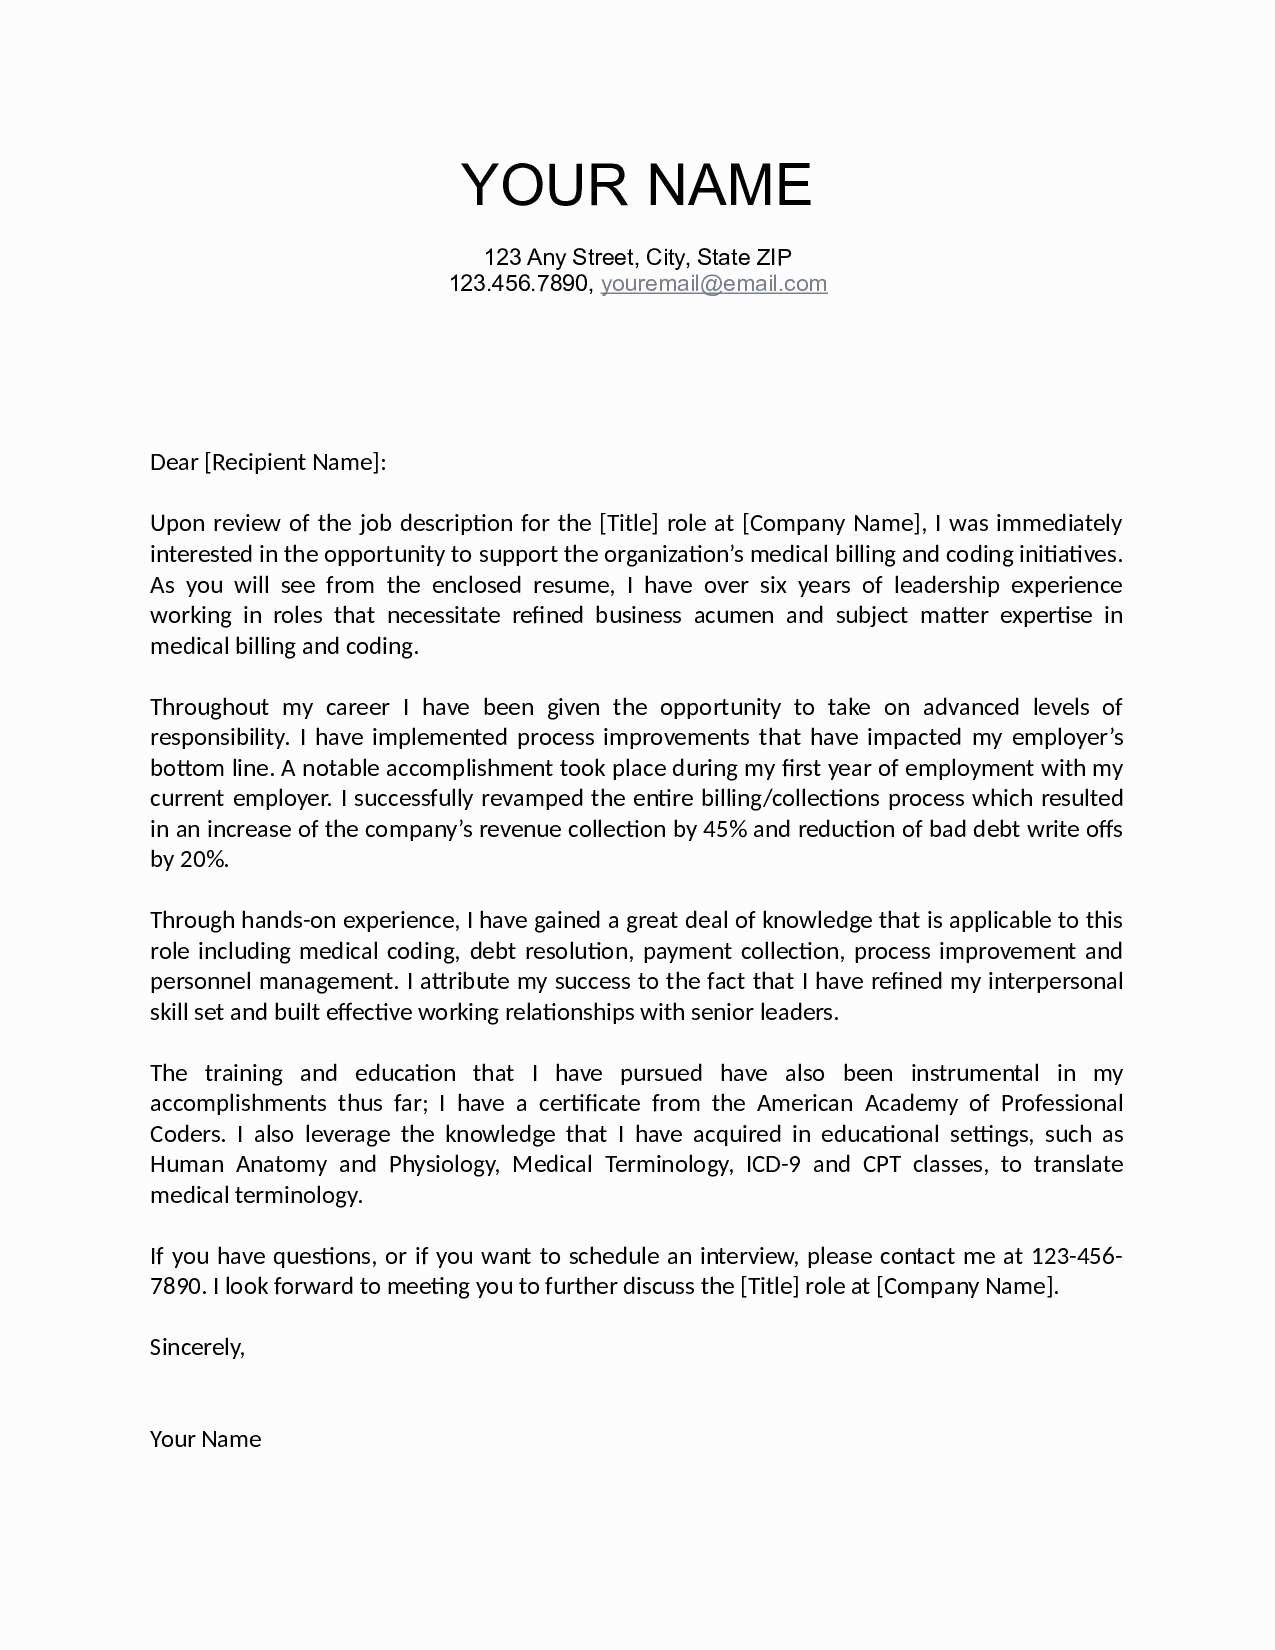 cover letter for rental house